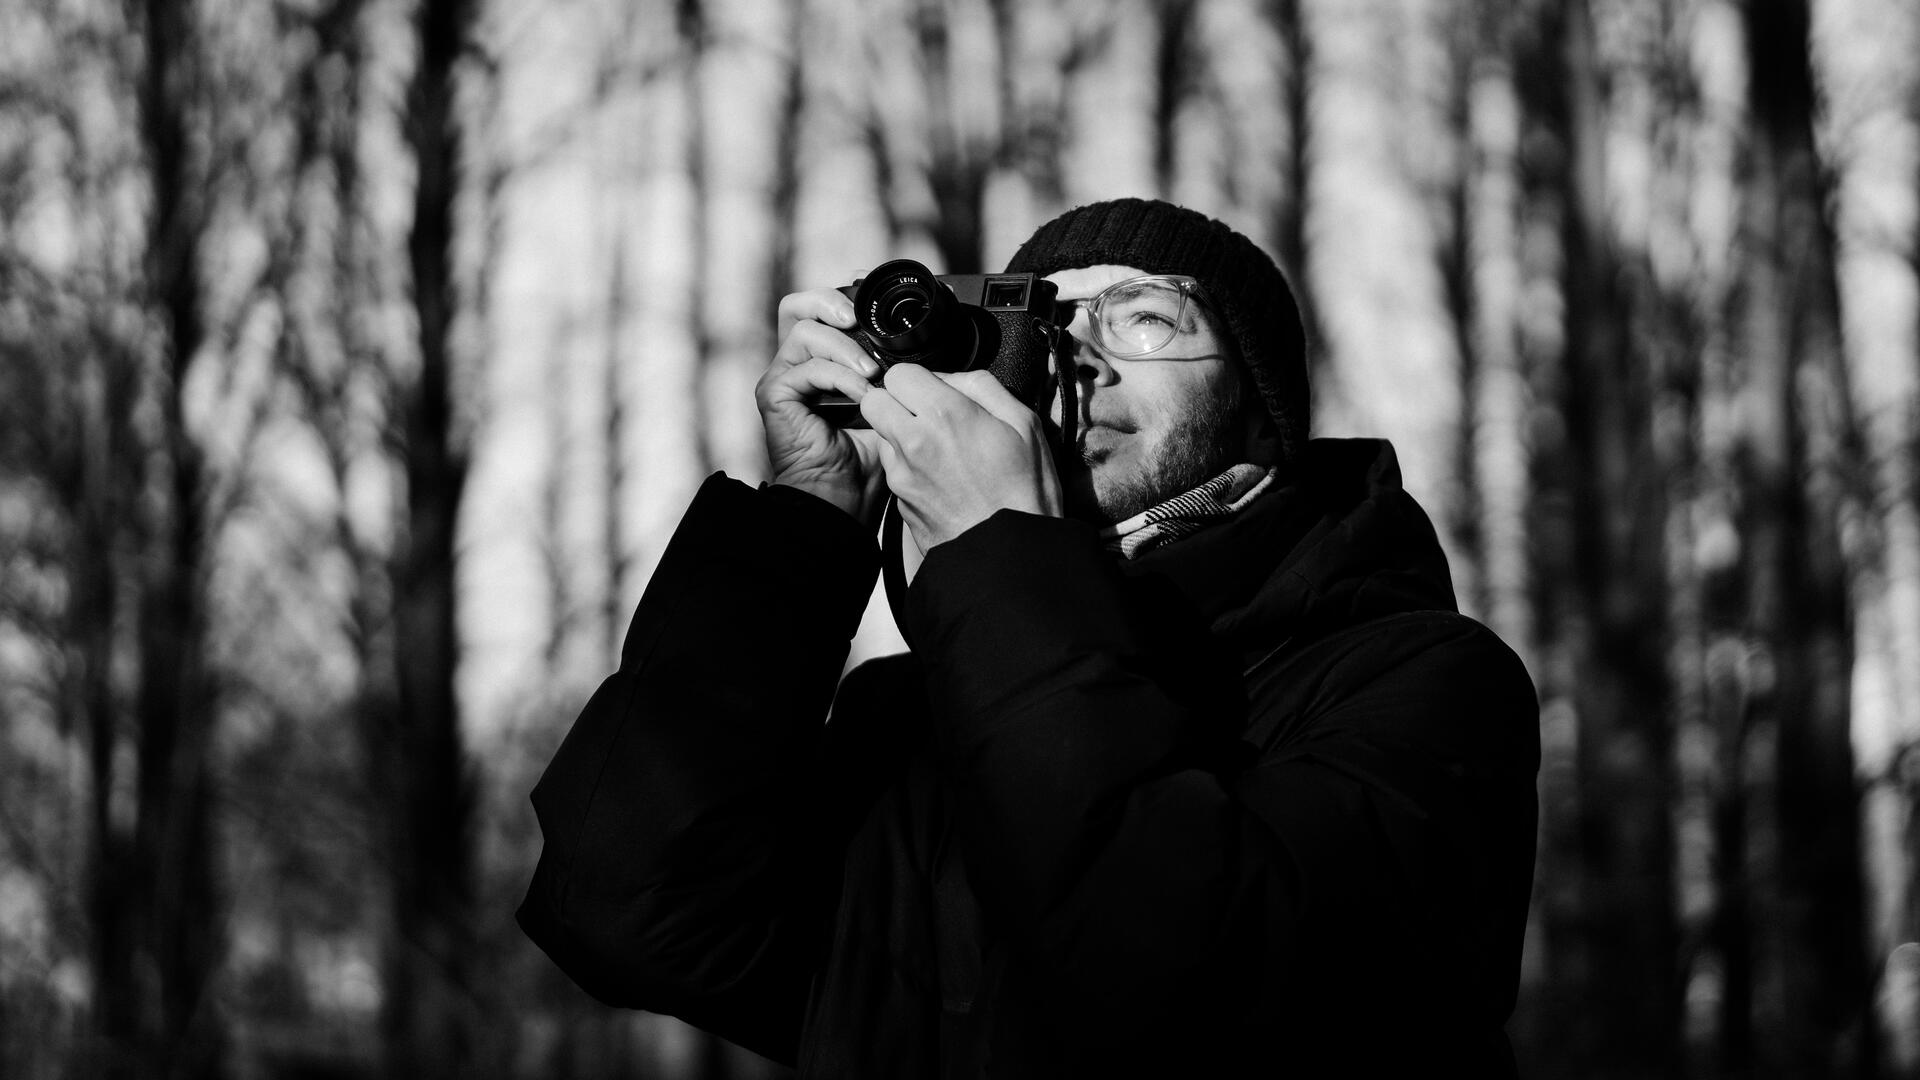 Joshua K. Jackson with the Leica M11